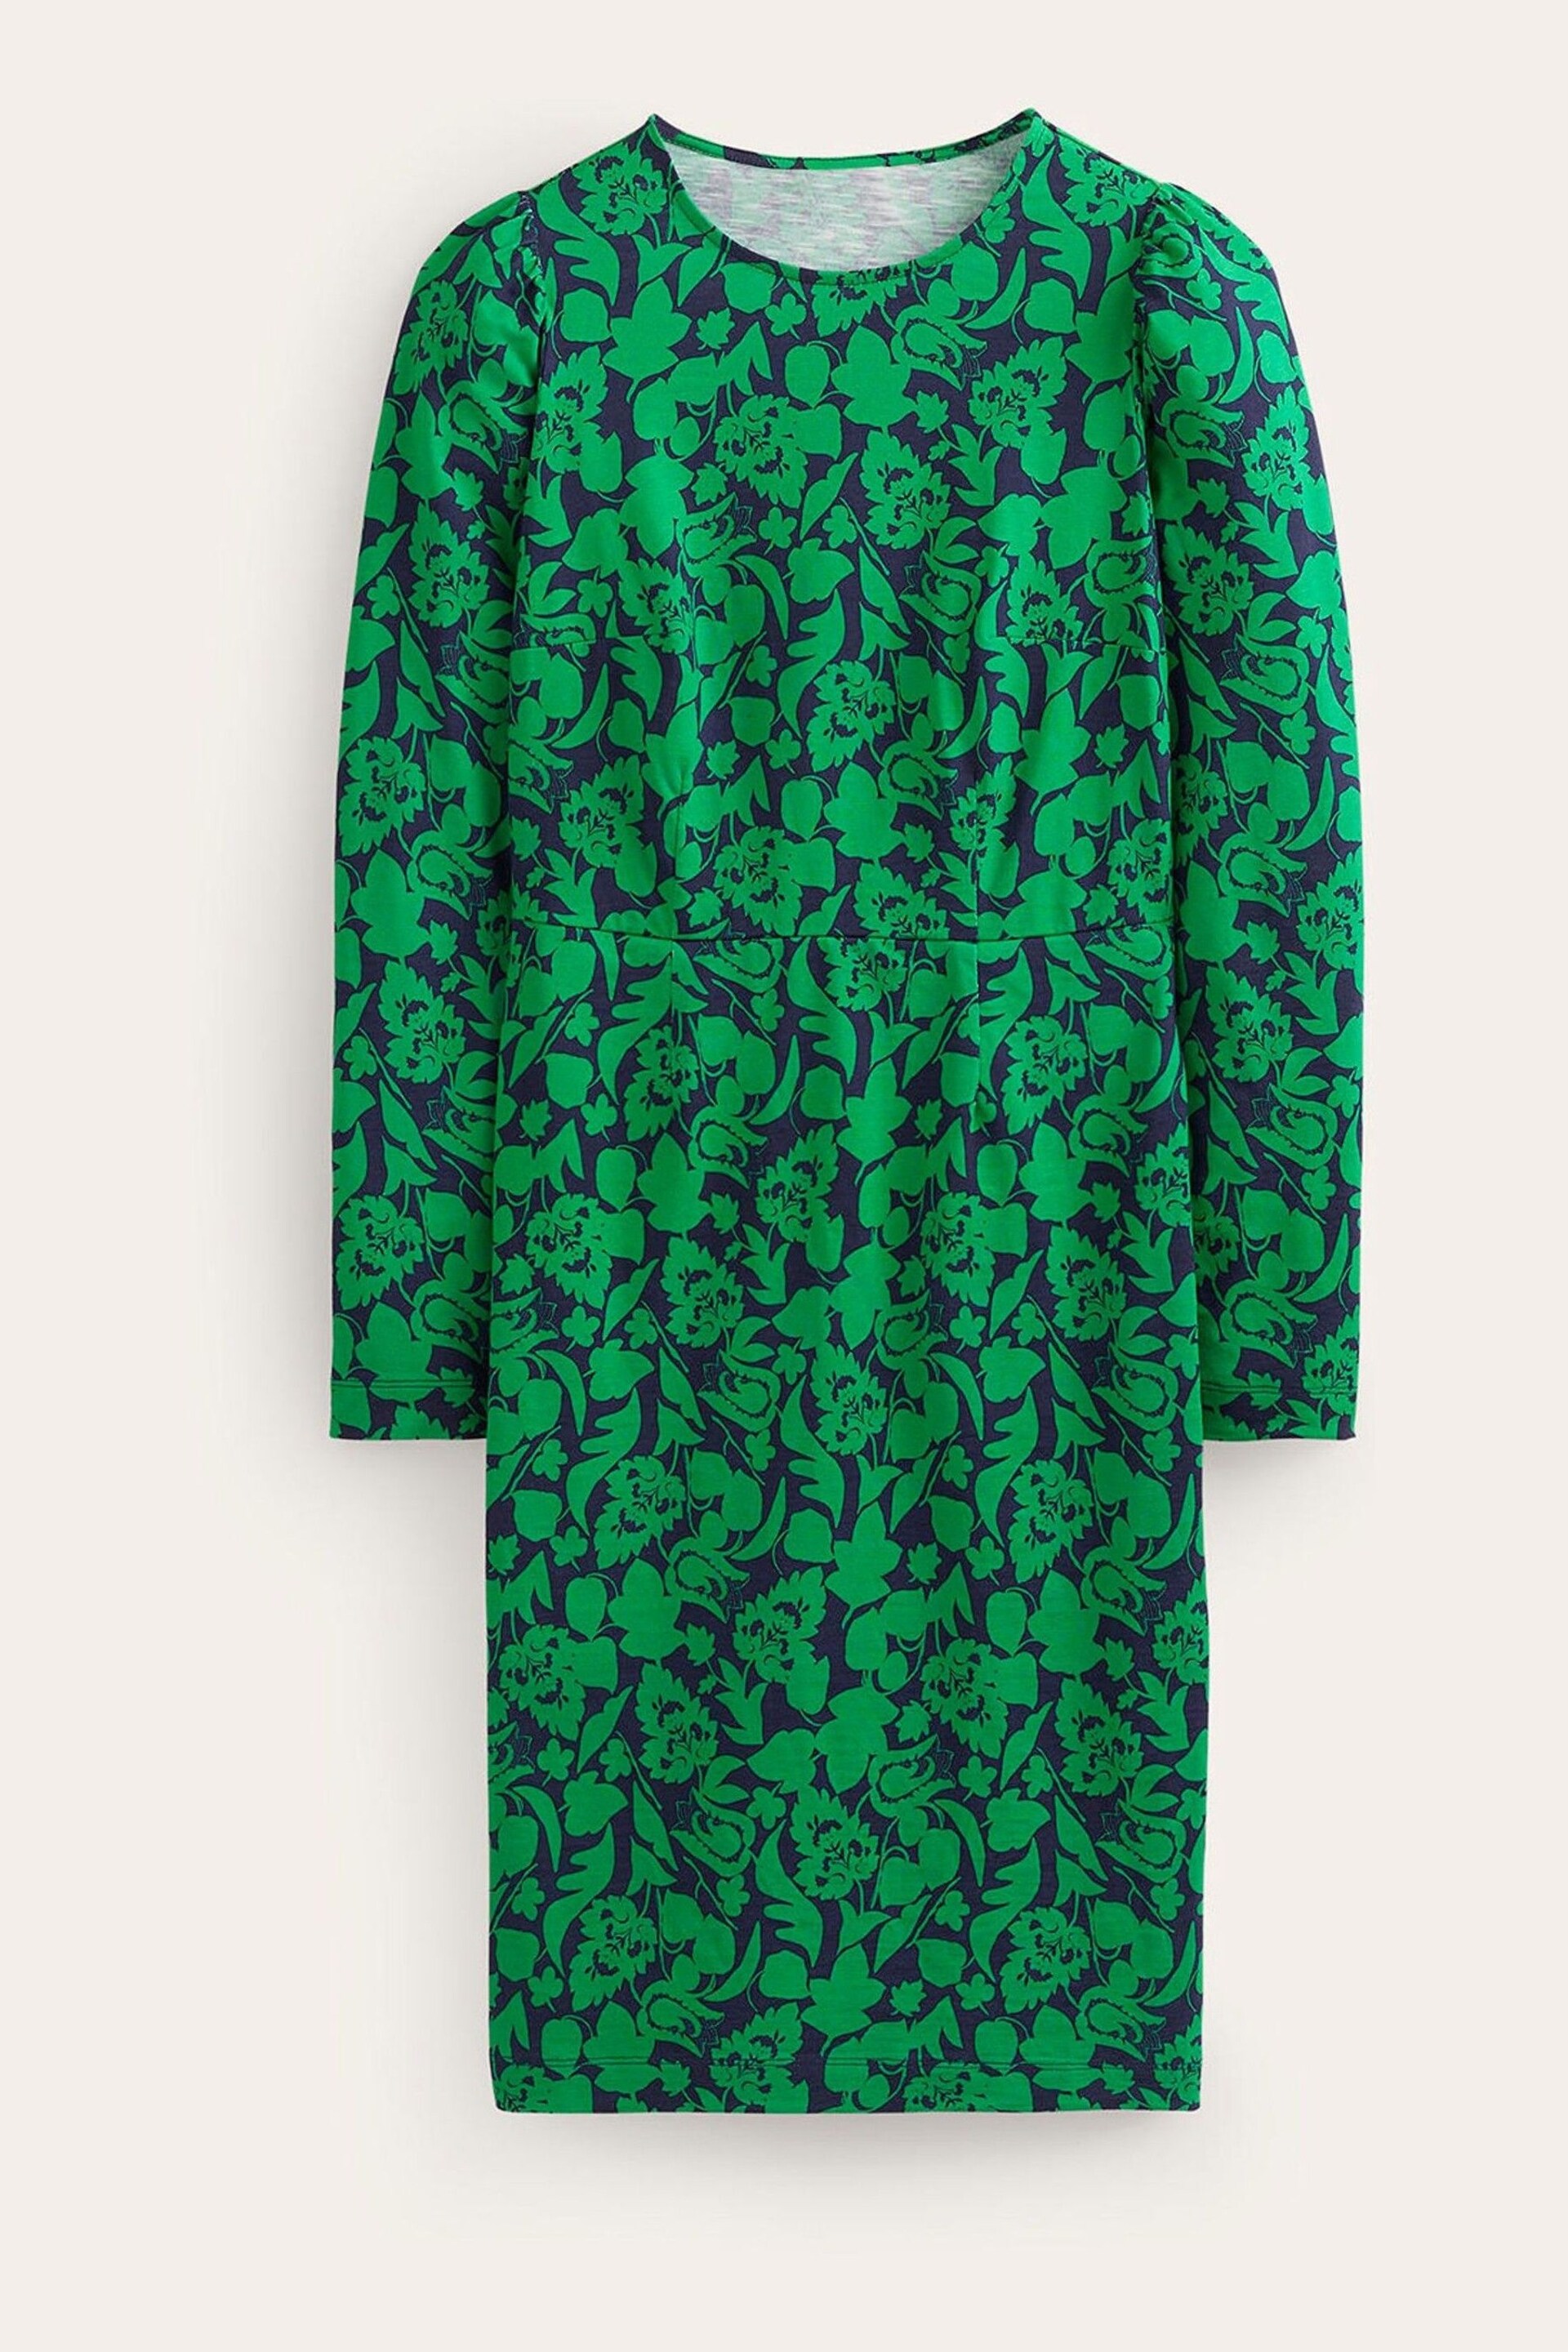 Boden Green Penelope Jersey Dress - Image 5 of 5